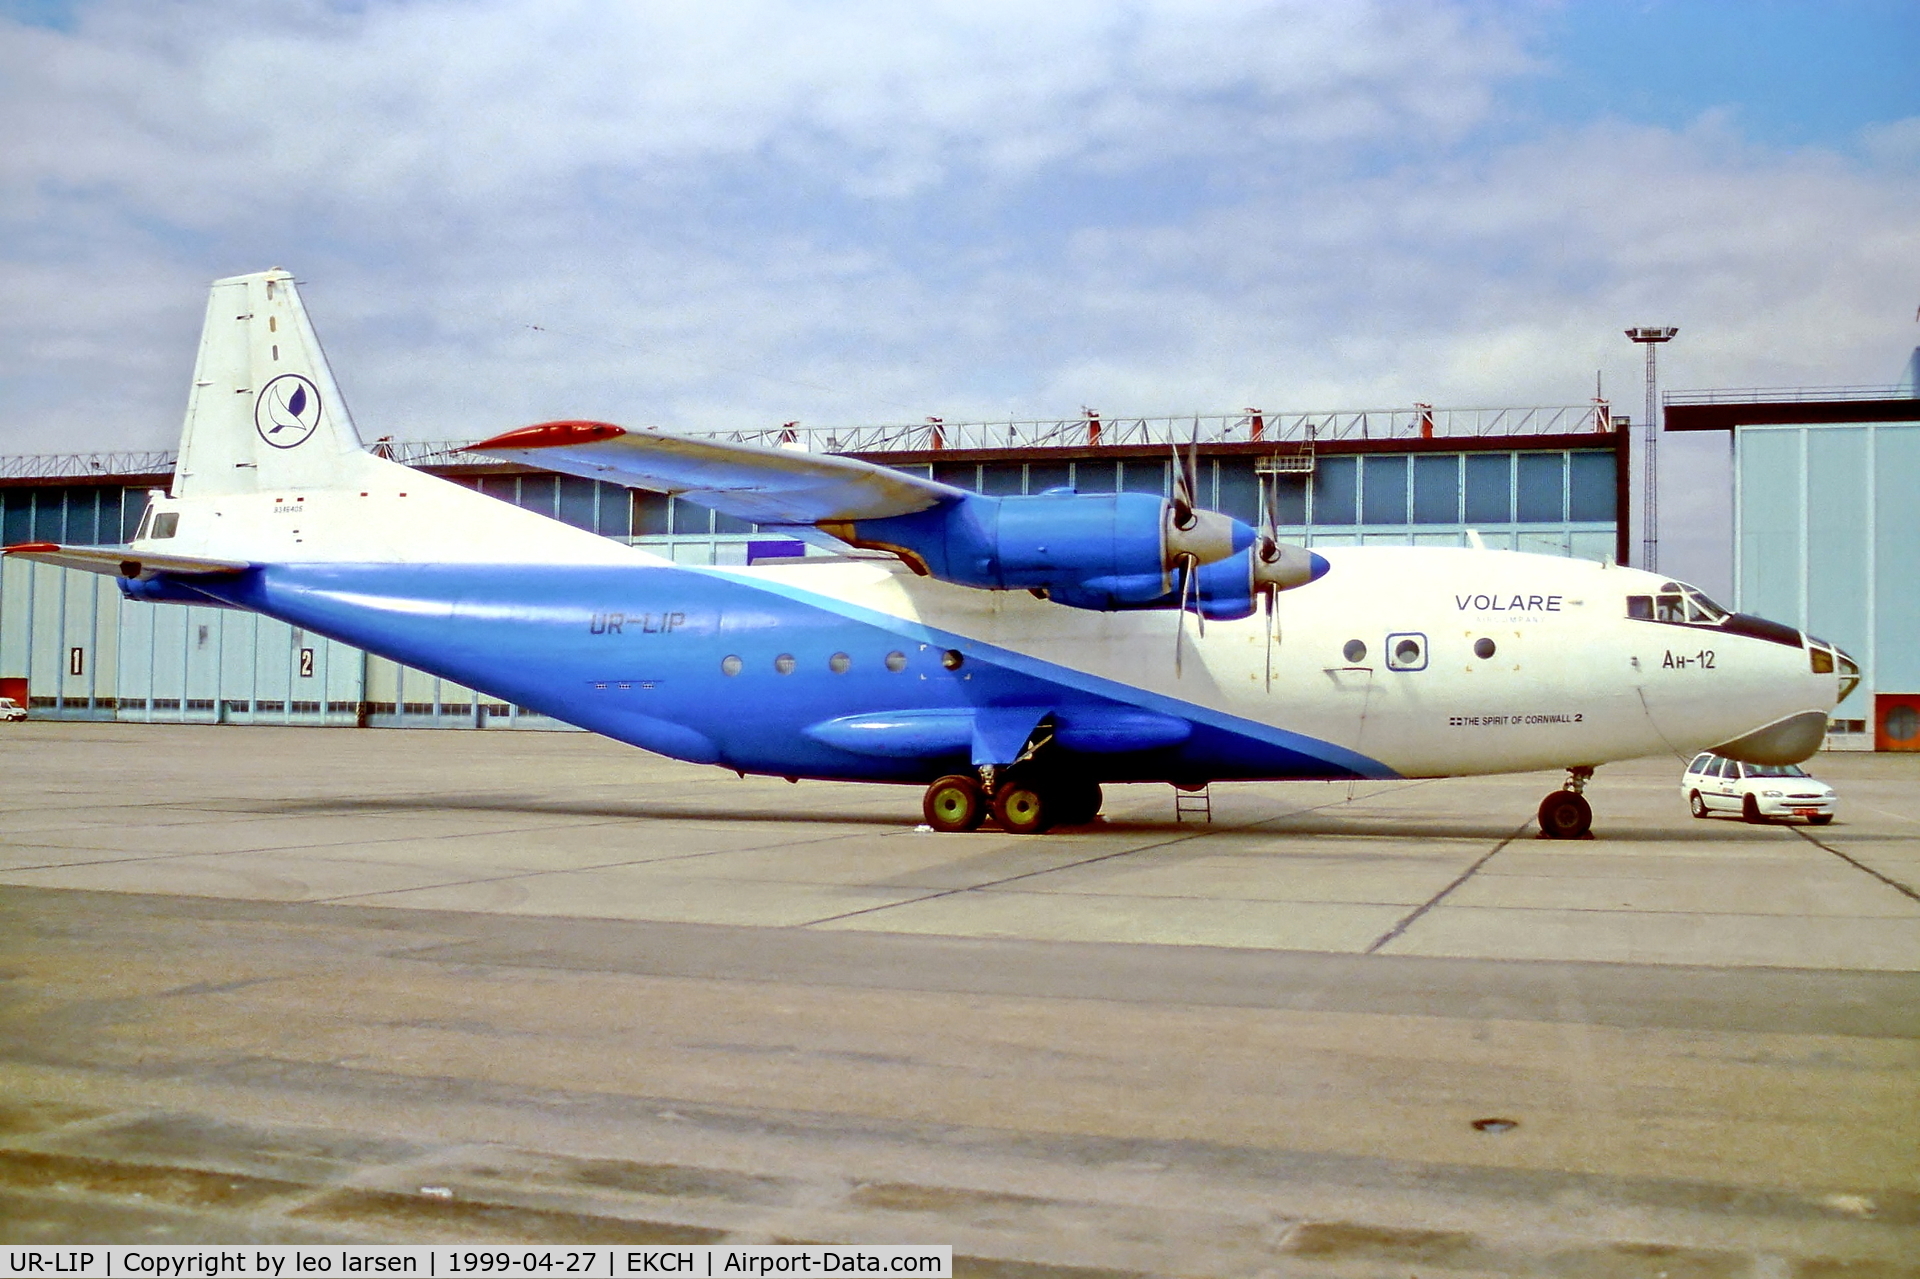 UR-LIP, 1969 Antonov An-12BP C/N 9 34 64 05, Copenhagen 27.4.99
Crashed 7.2.02 Agadir